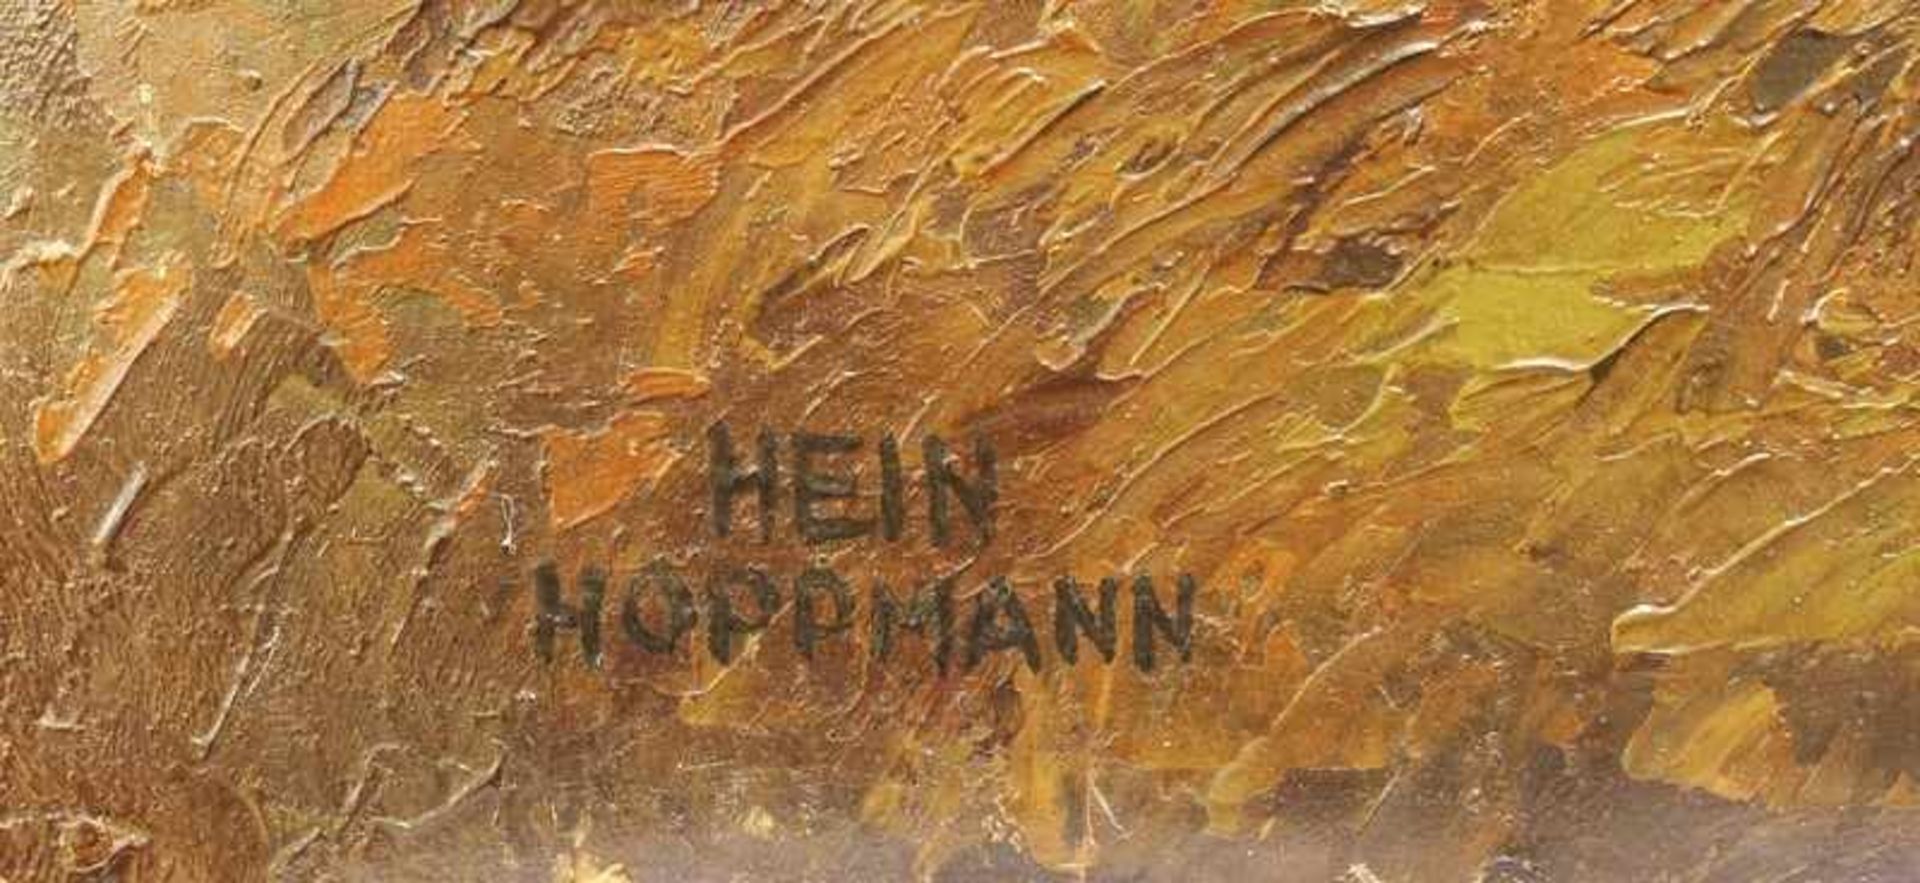 Hoppmann, Hein "Moorlandschaft im Herbst", Öl/Platte, erdtonige Farbpalette, pastoser Duktus, - Bild 2 aus 4